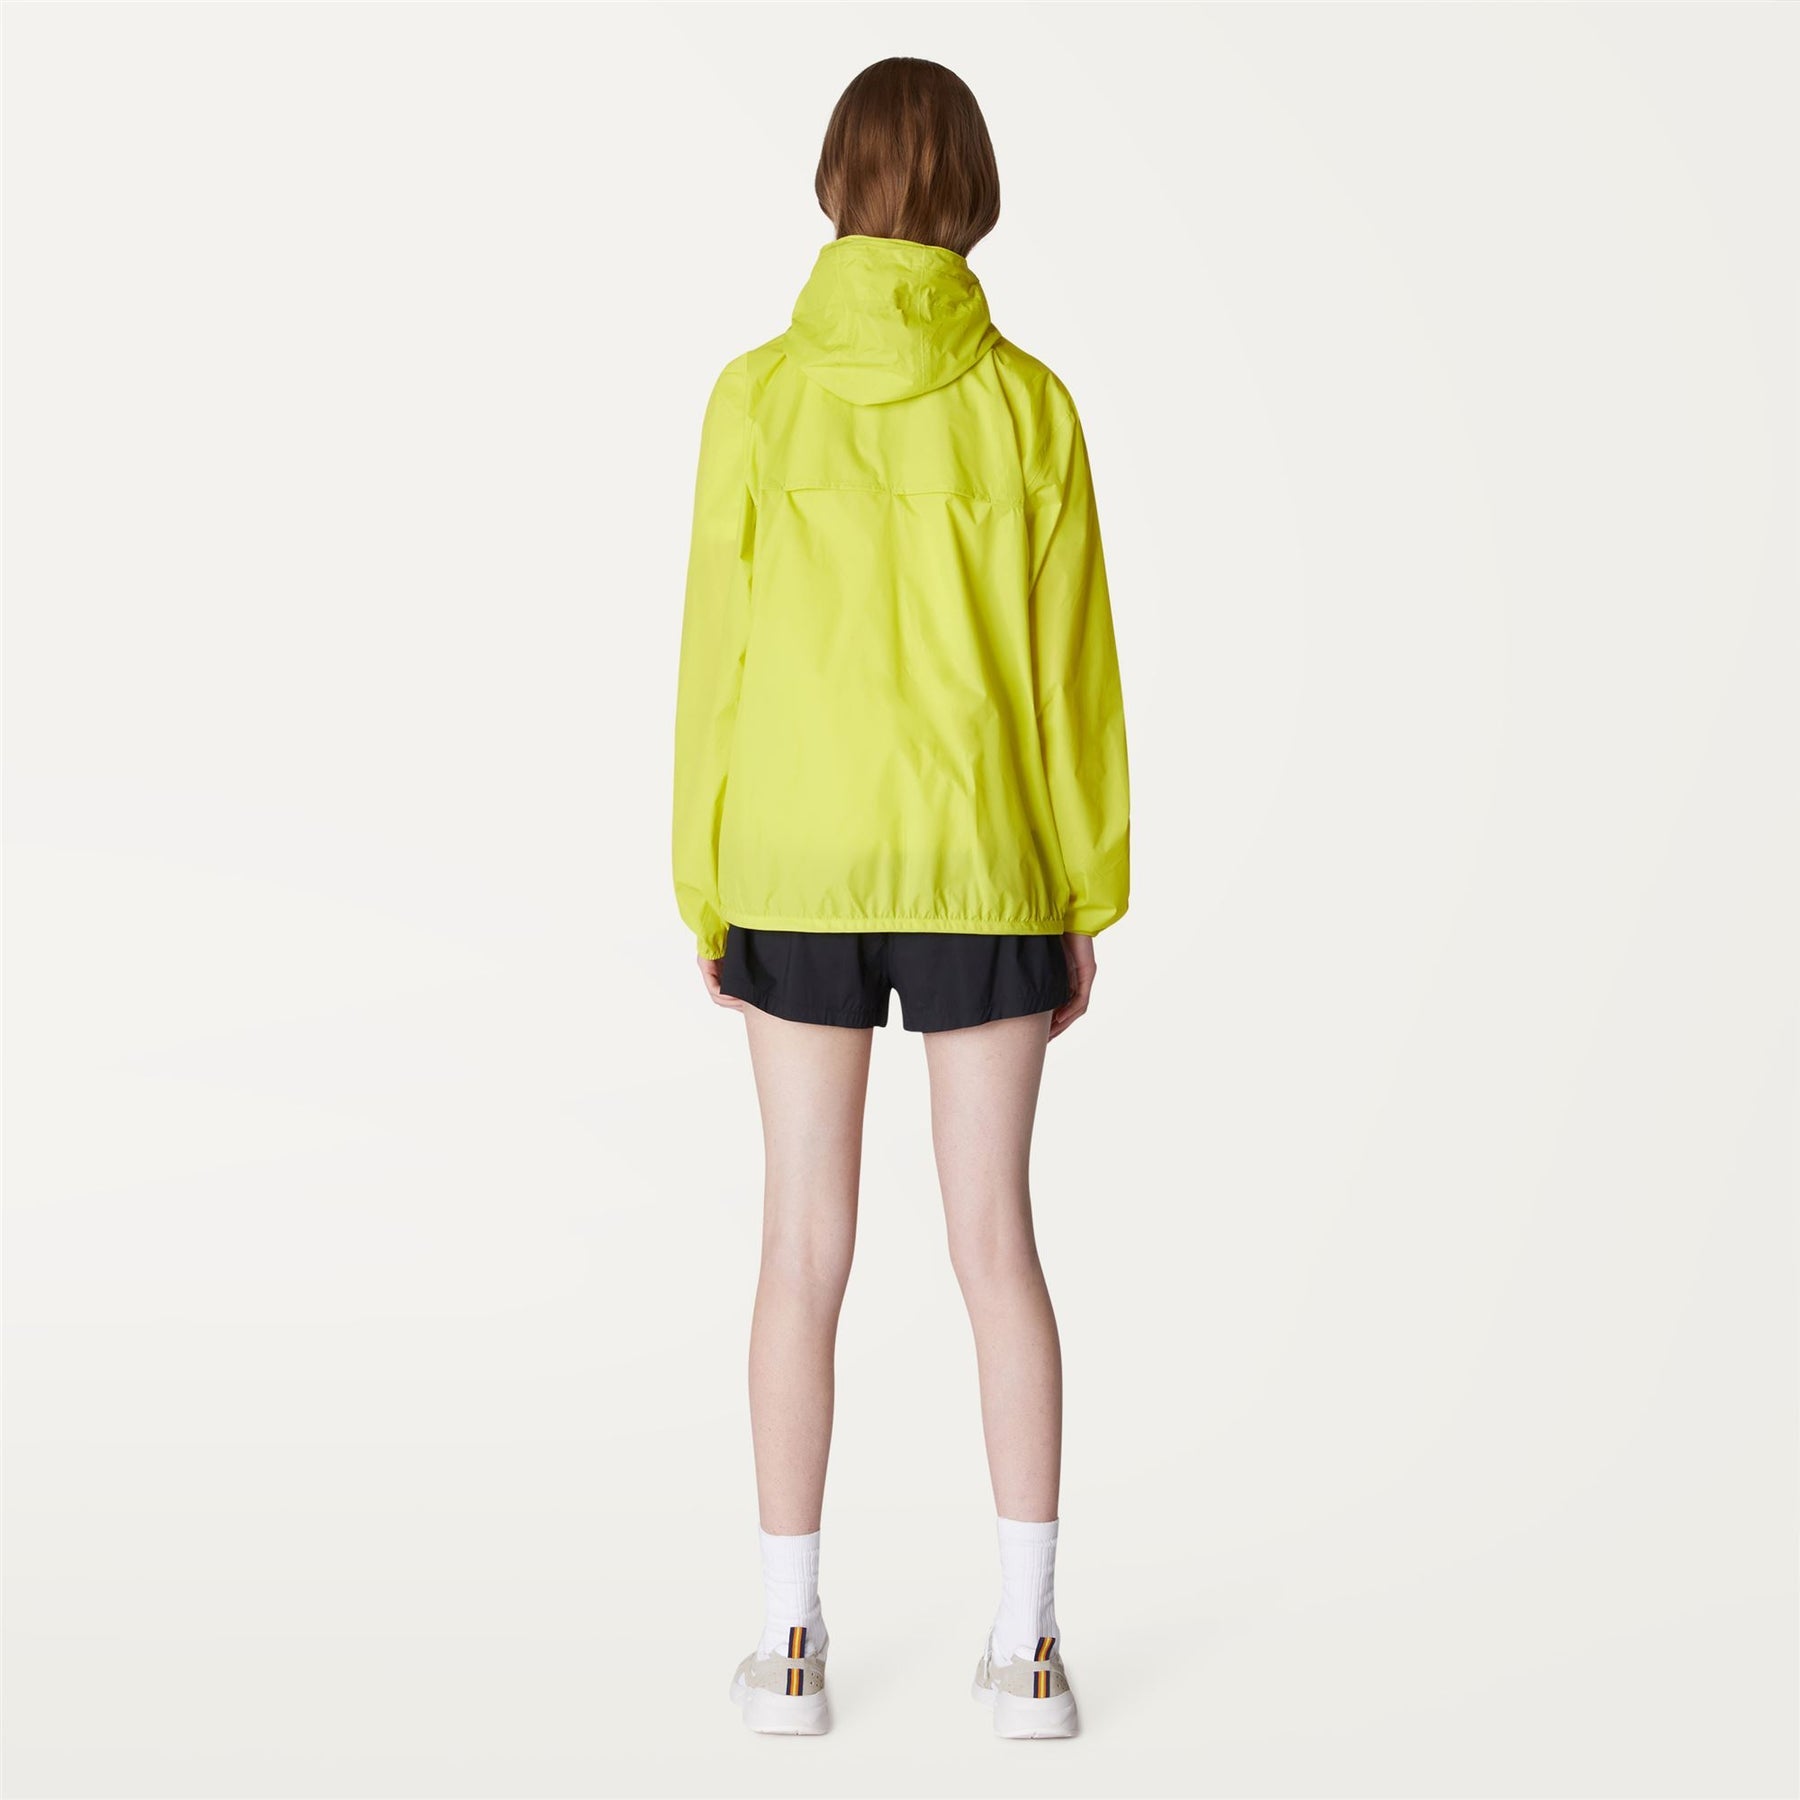 Claude - Unisex Packable Full Zip Waterproof  Rain Jacket in Green Lime